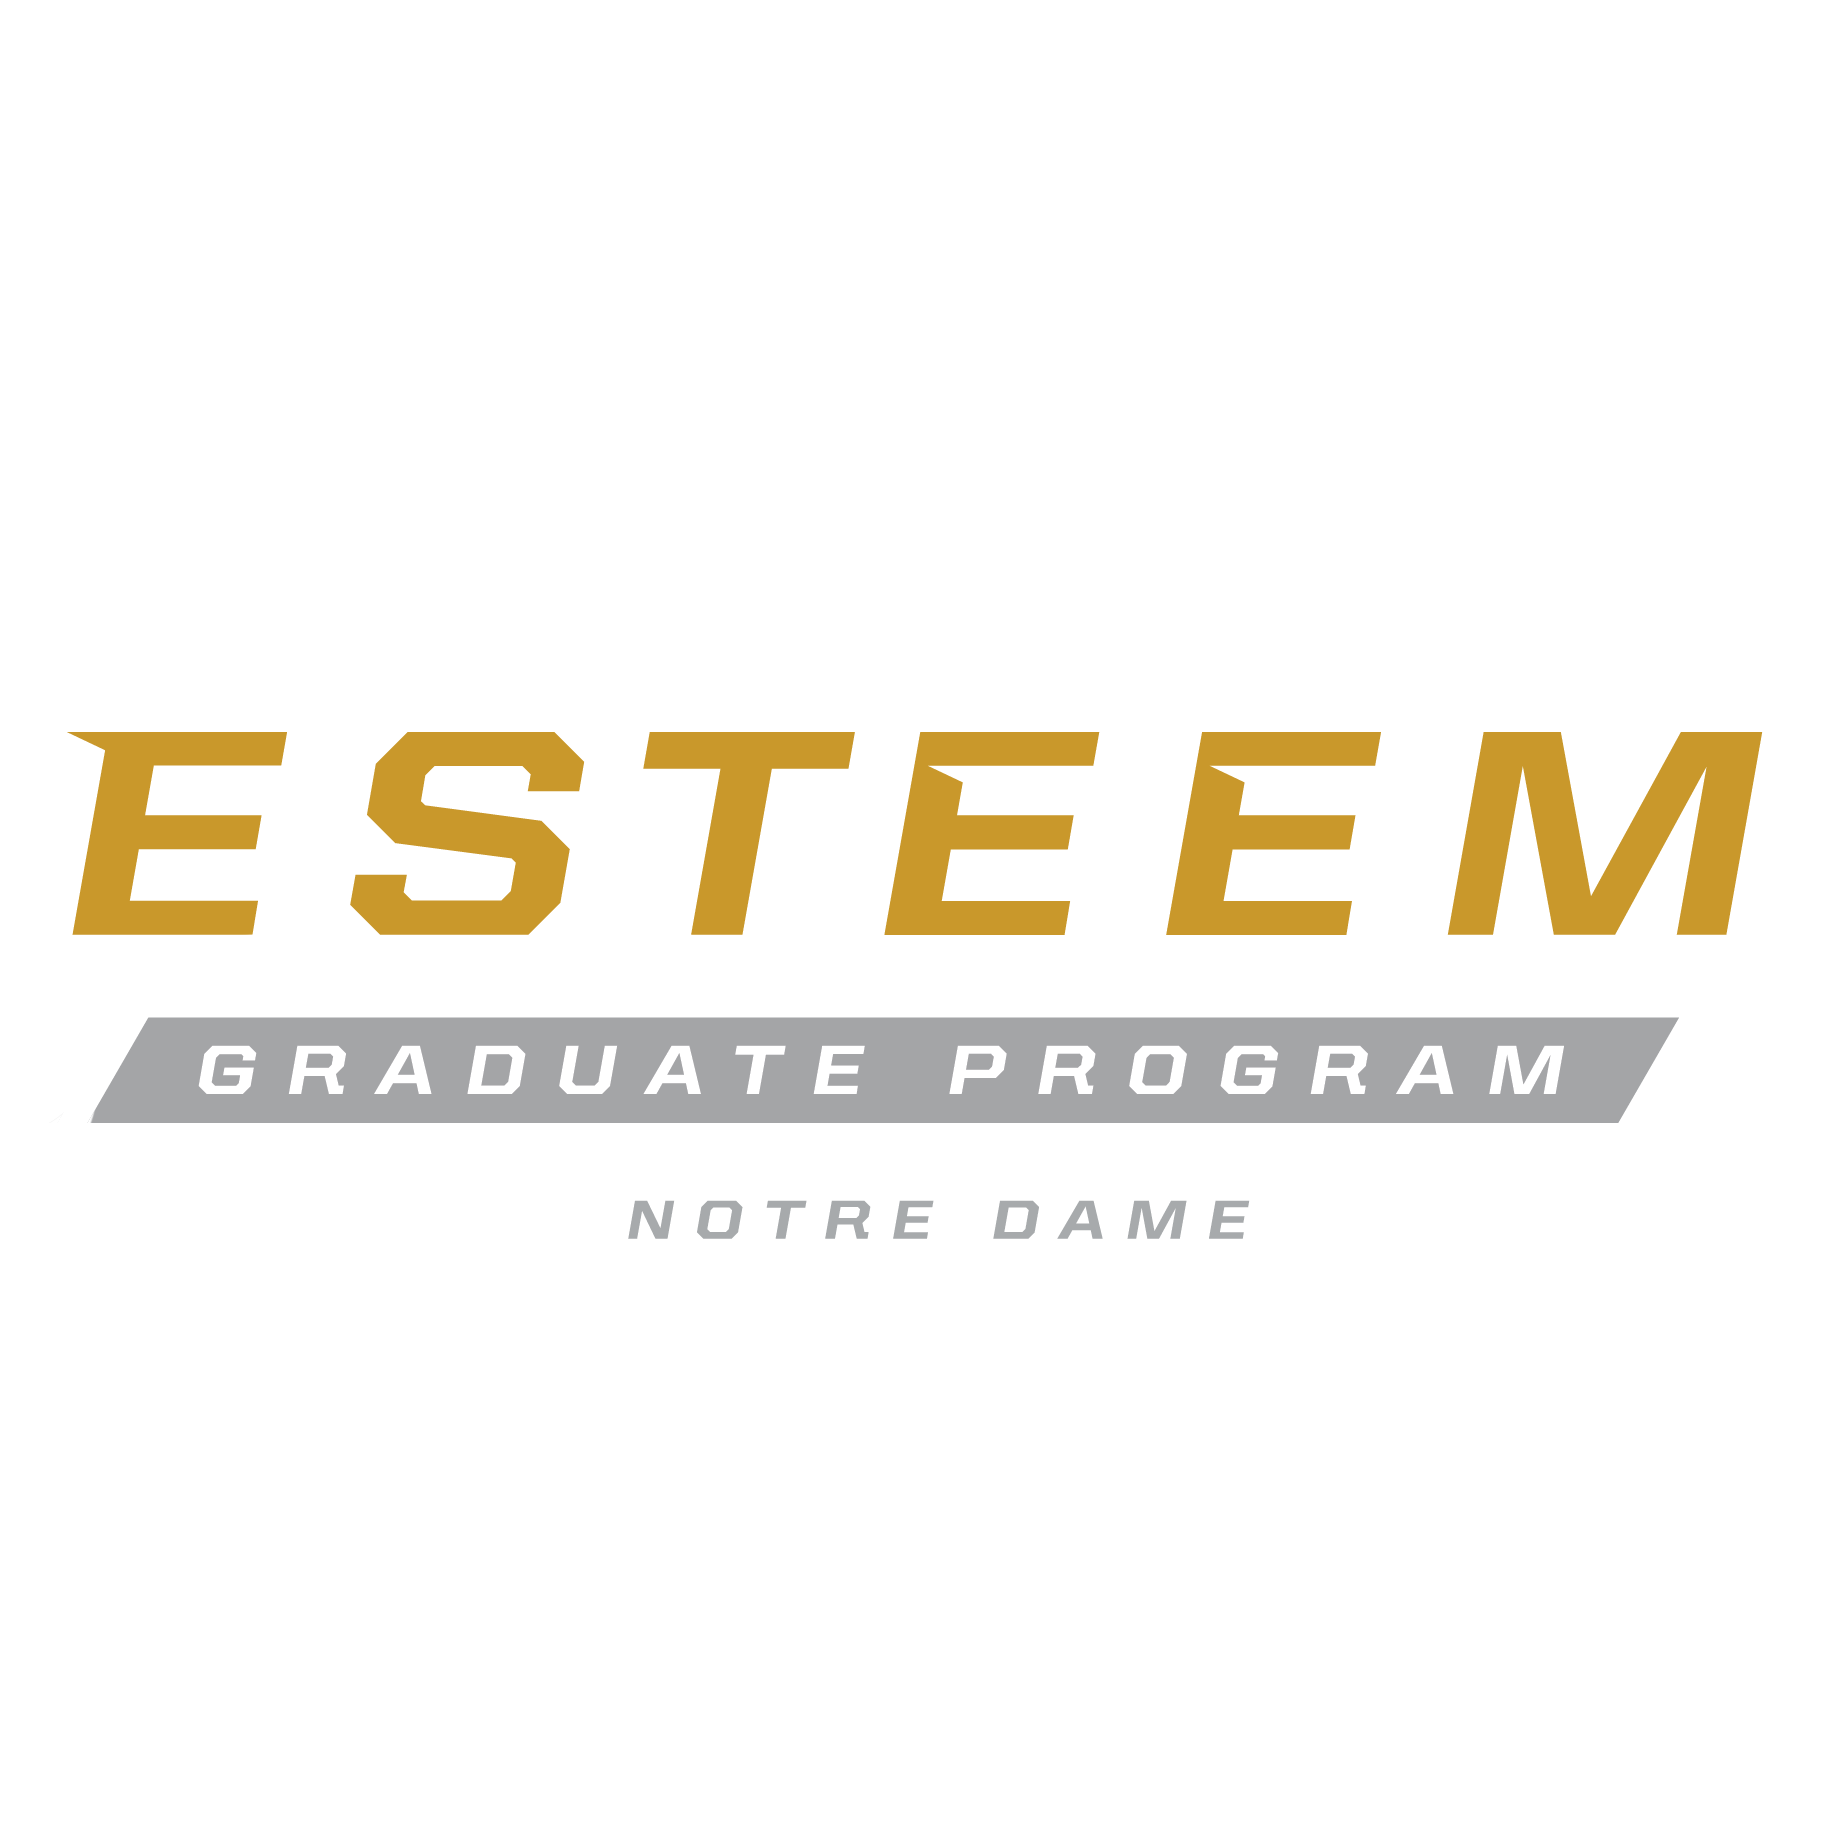 Notre Dame ESTEEM Graduate Program 